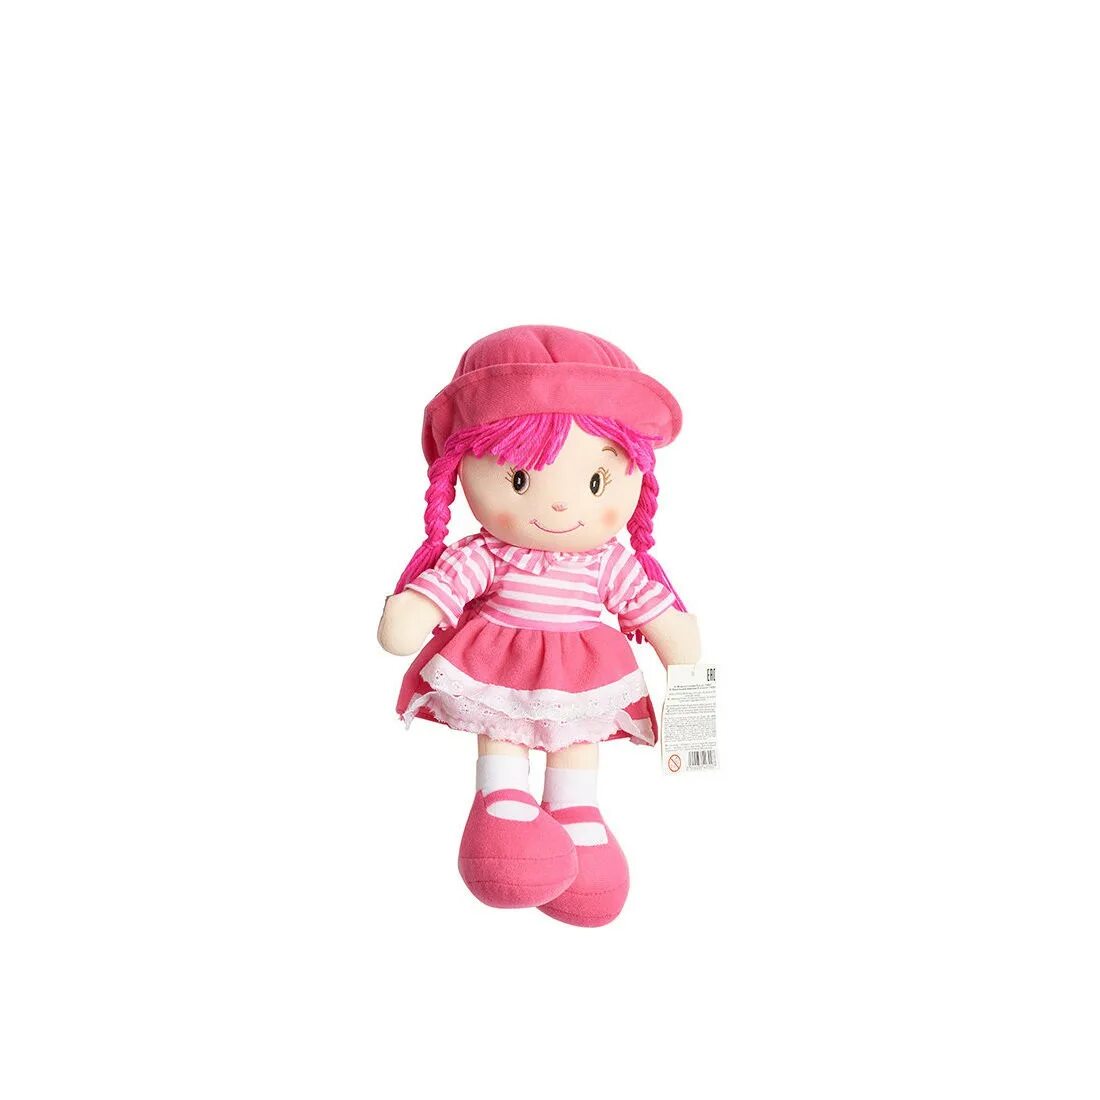 Мягкие куклы купить. Мягкая кукла. Мягкая кукла для девочек. Мягкая кукла для девочек 1 год. Кукла розовая мягкая.